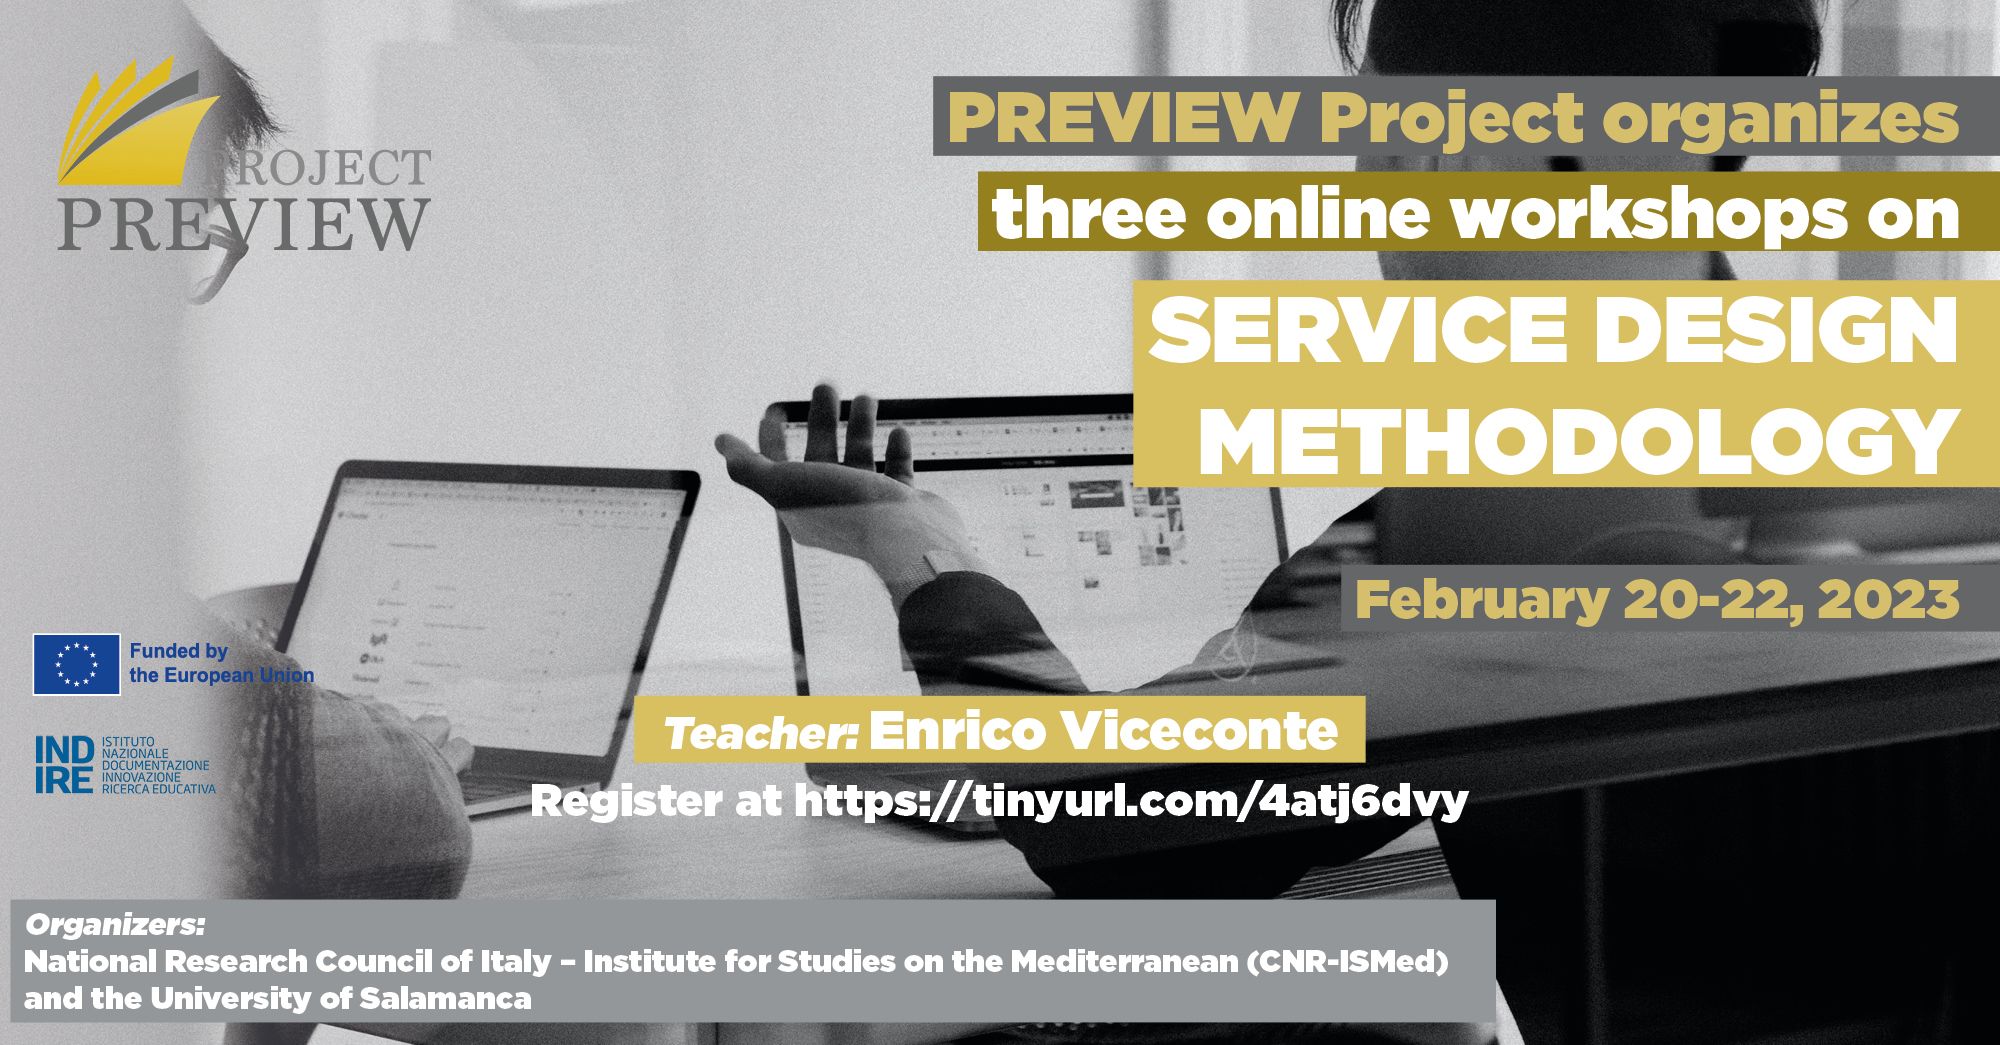 Service Design Methodology laboratory online